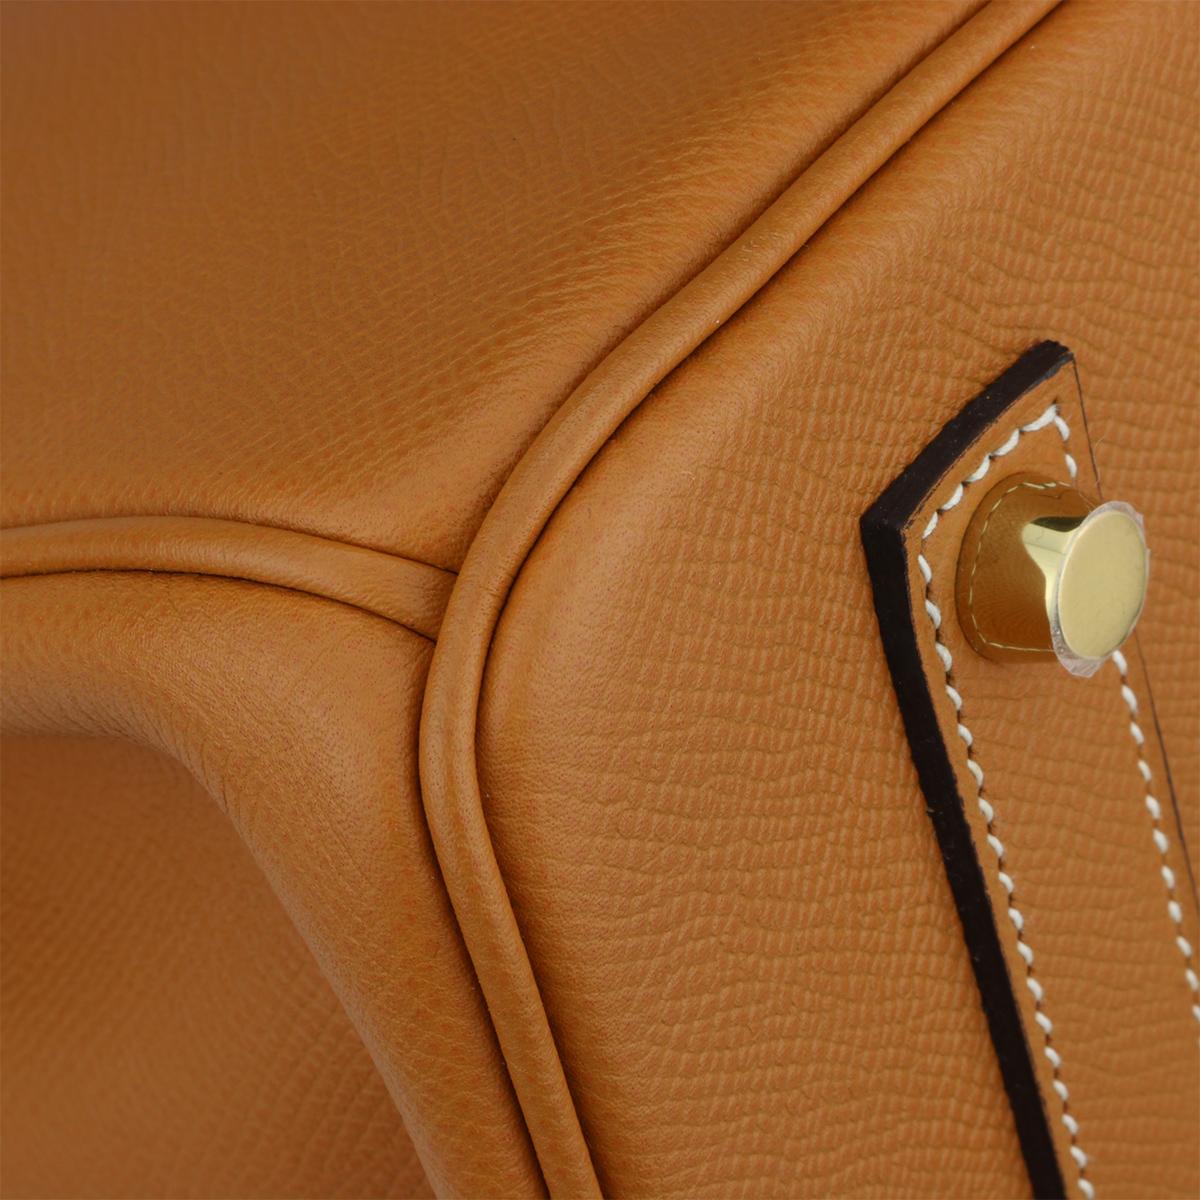 Hermès Birkin 35cm Bag Toffee Epsom Leather with Gold Hardware Stamp A 2017 2